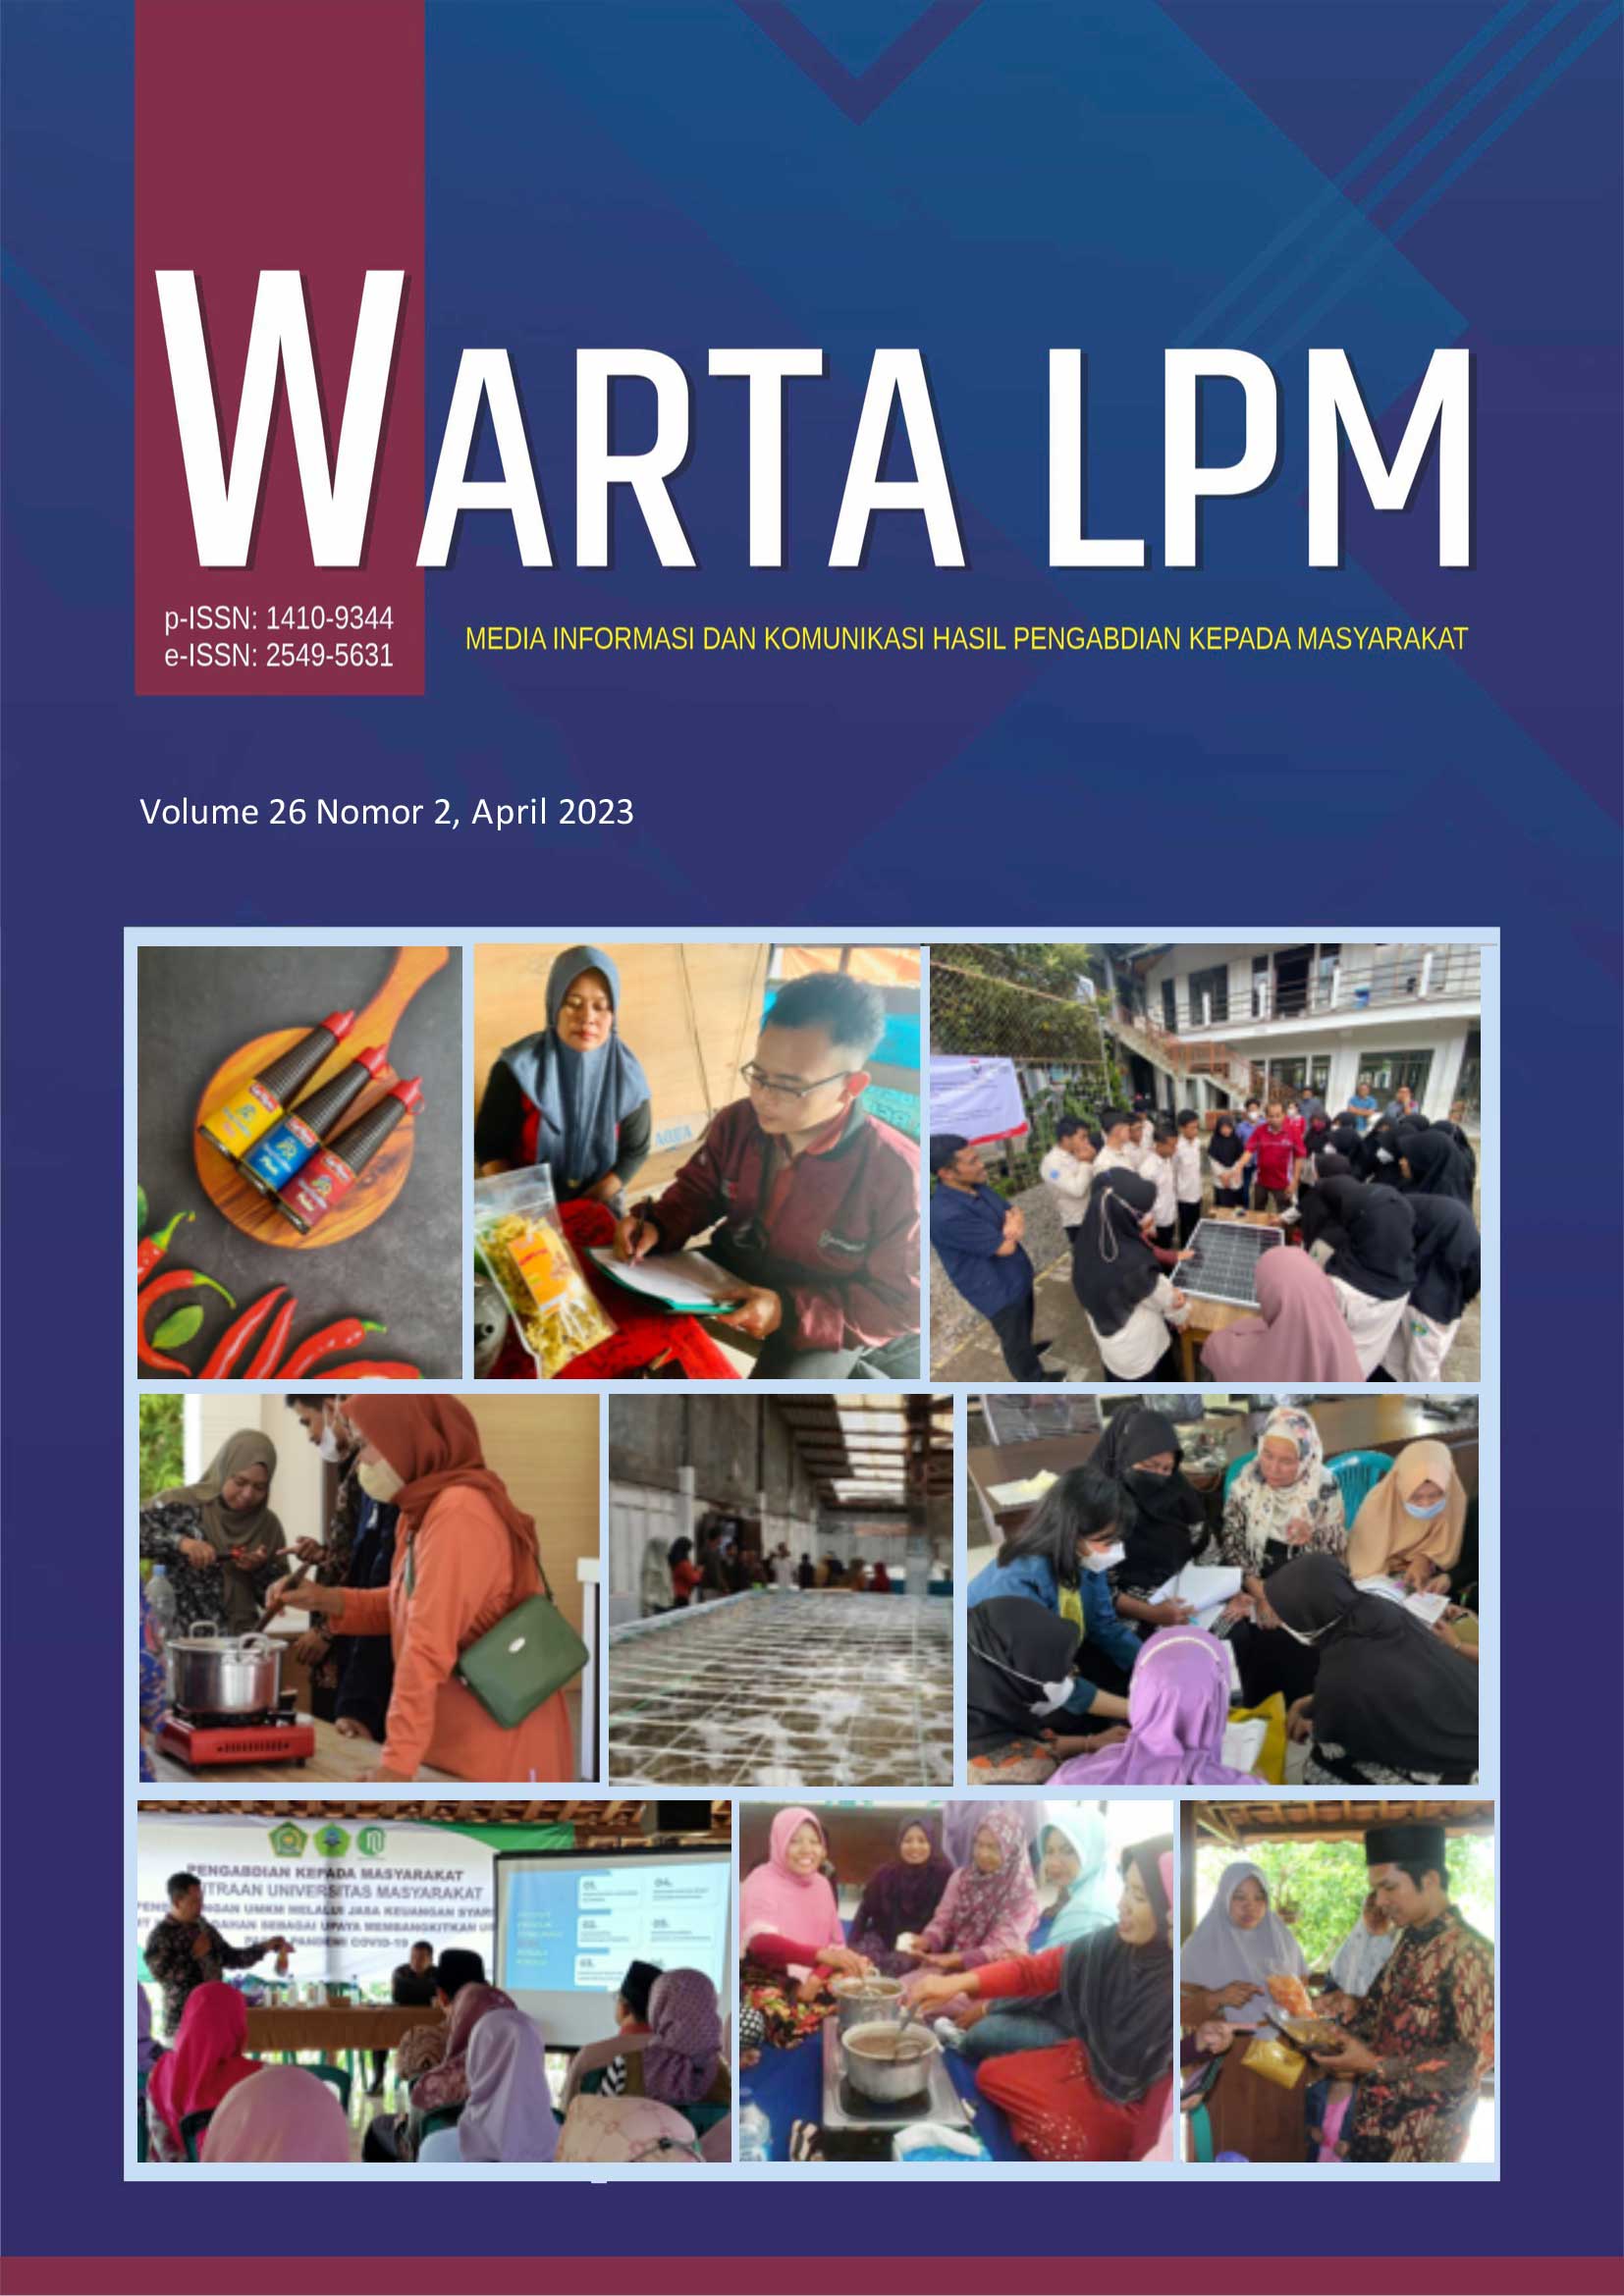 					View WARTA LPM, Vol. 26, No. 2, April 2023
				